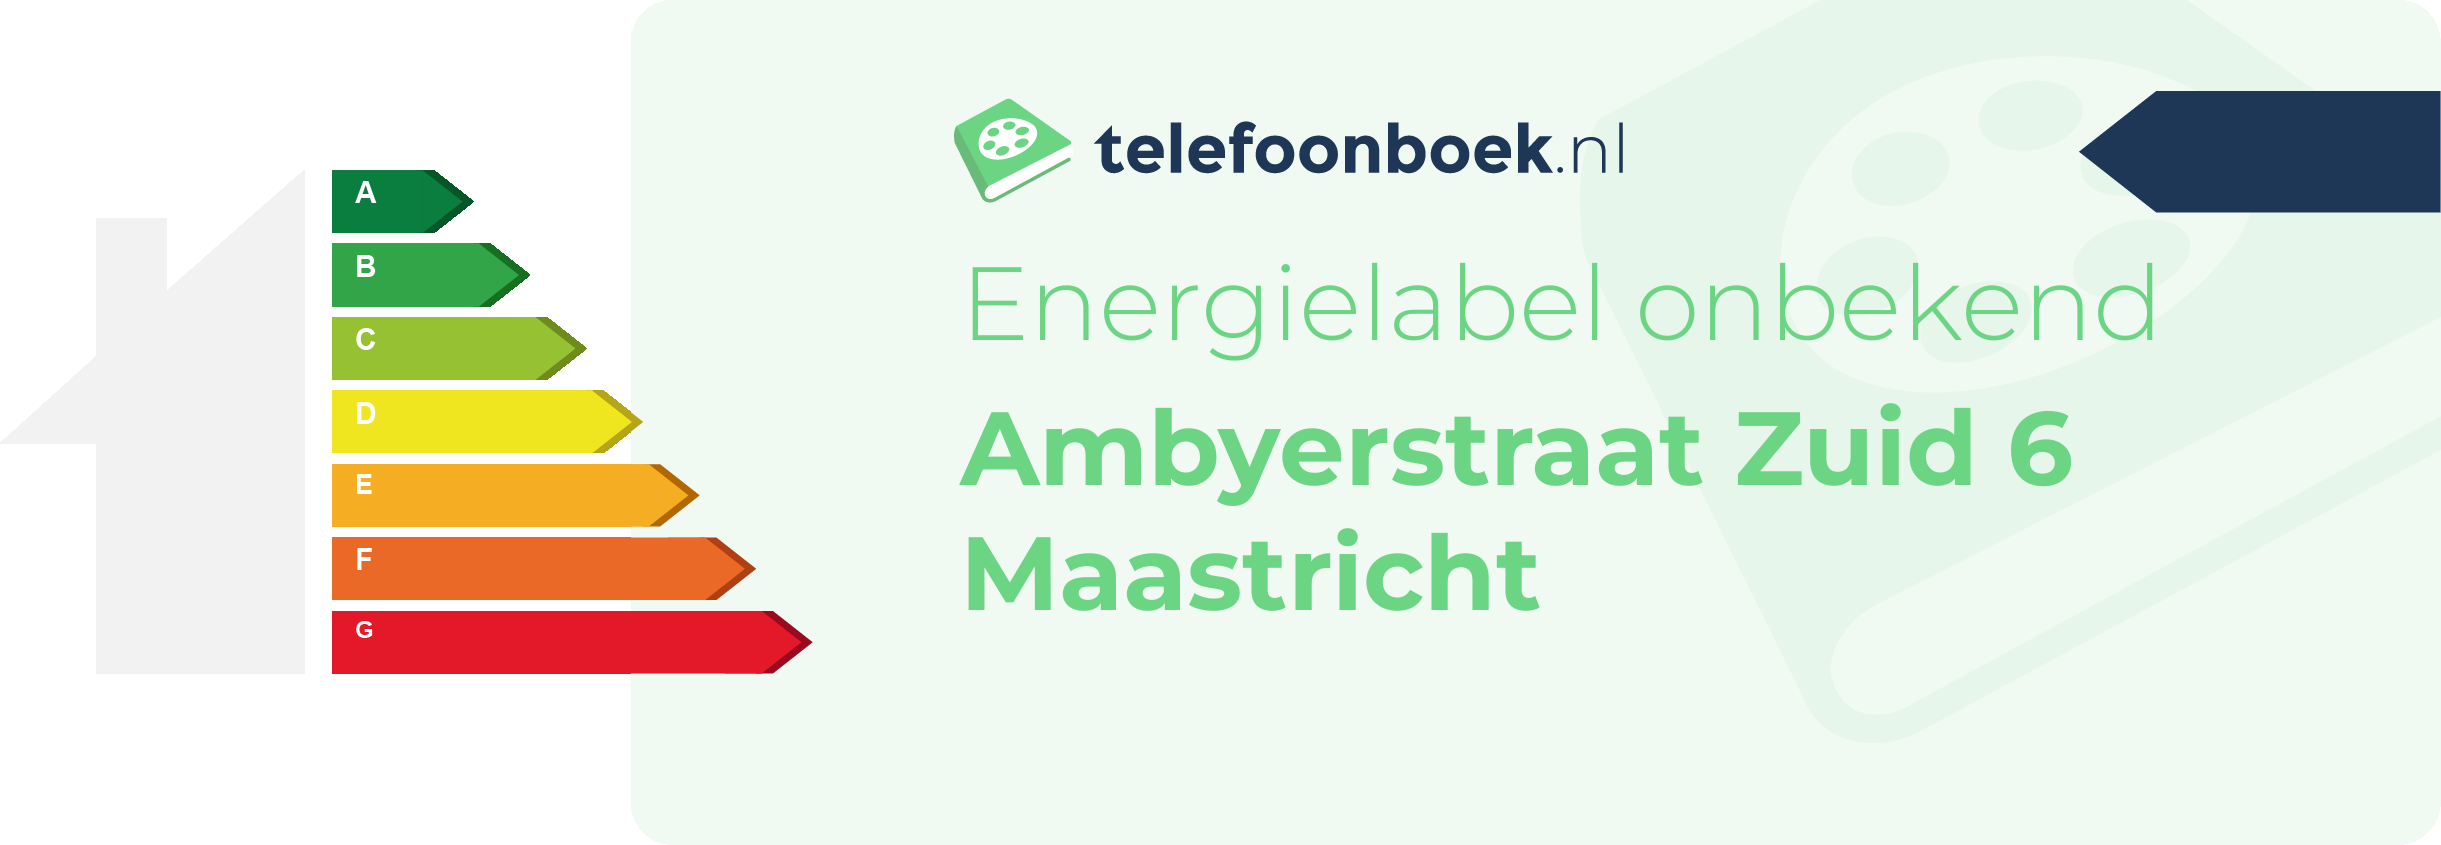 Energielabel Ambyerstraat Zuid 6 Maastricht